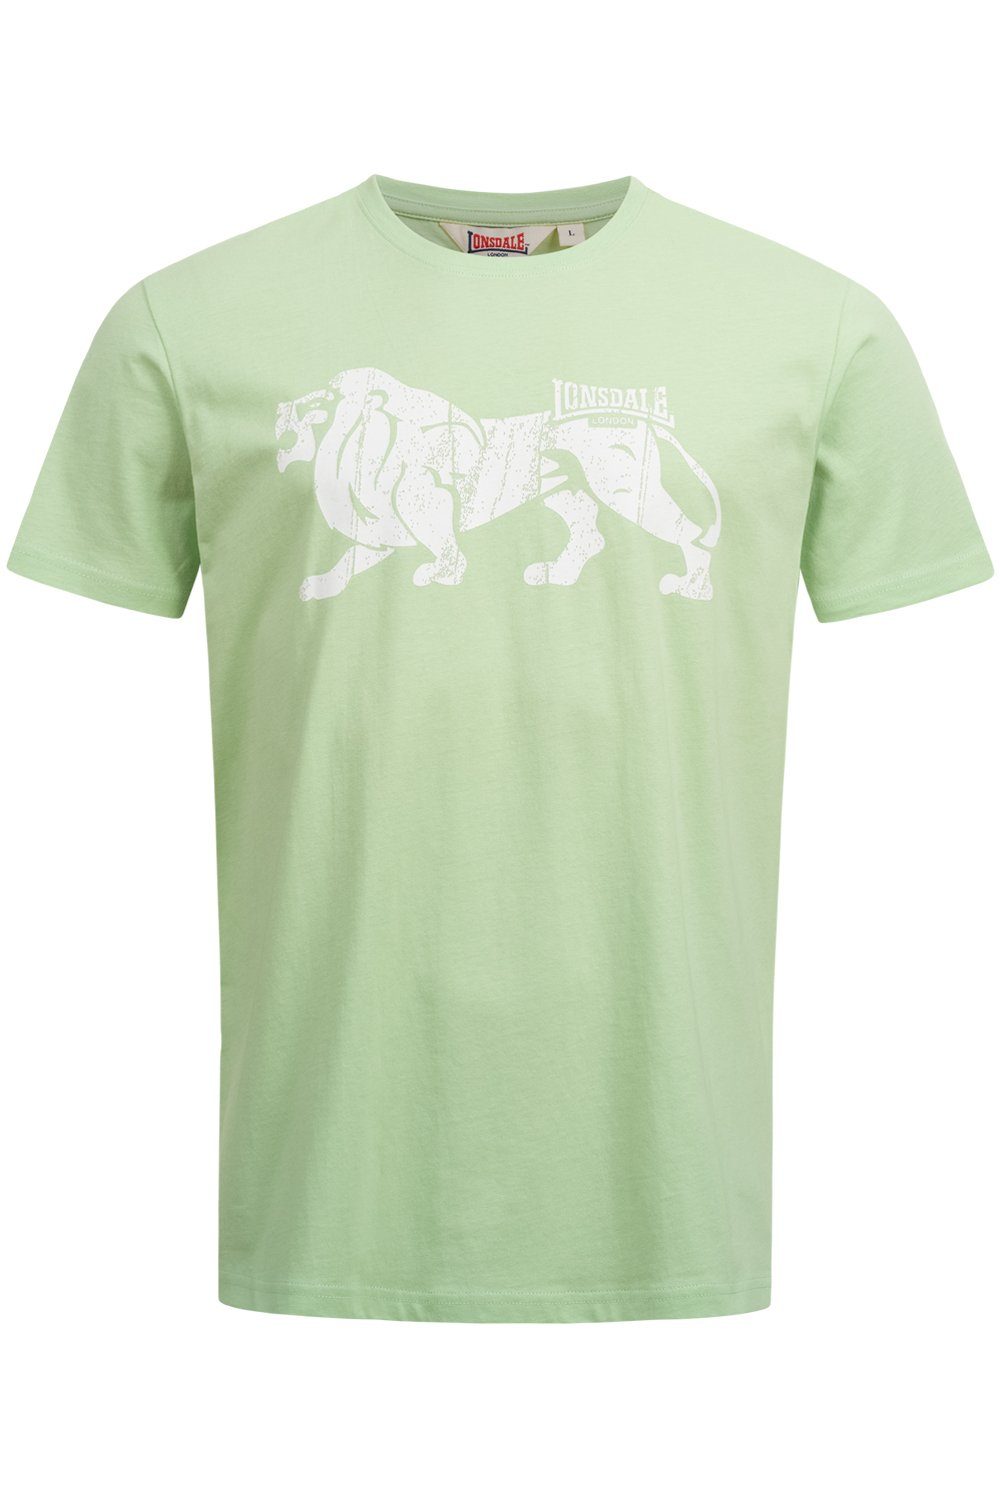 Lonsdale T-Shirt ENDMOOR Pastel Green/White